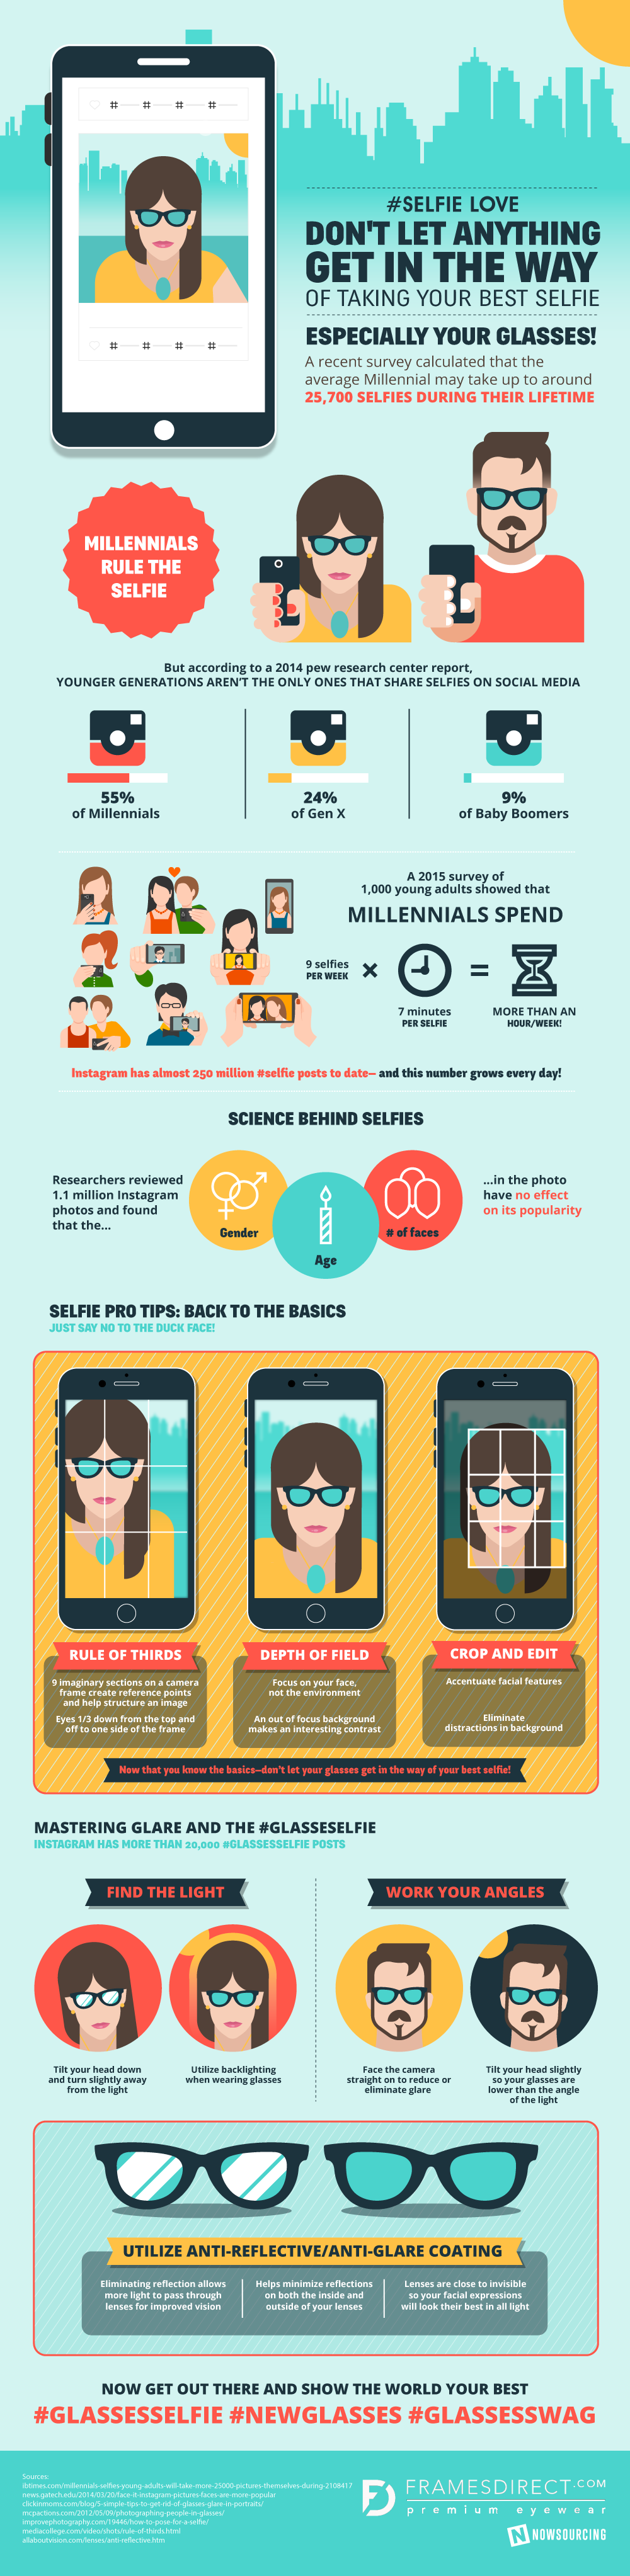 selfie-infographic